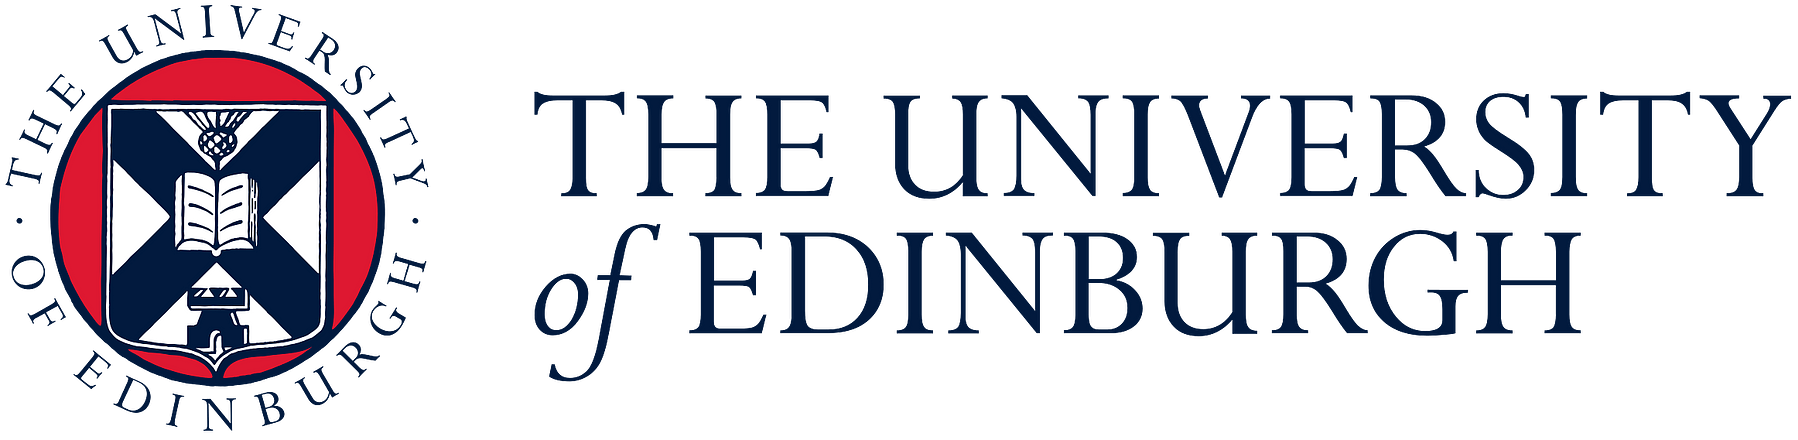 University of Edinburgh, UK logo